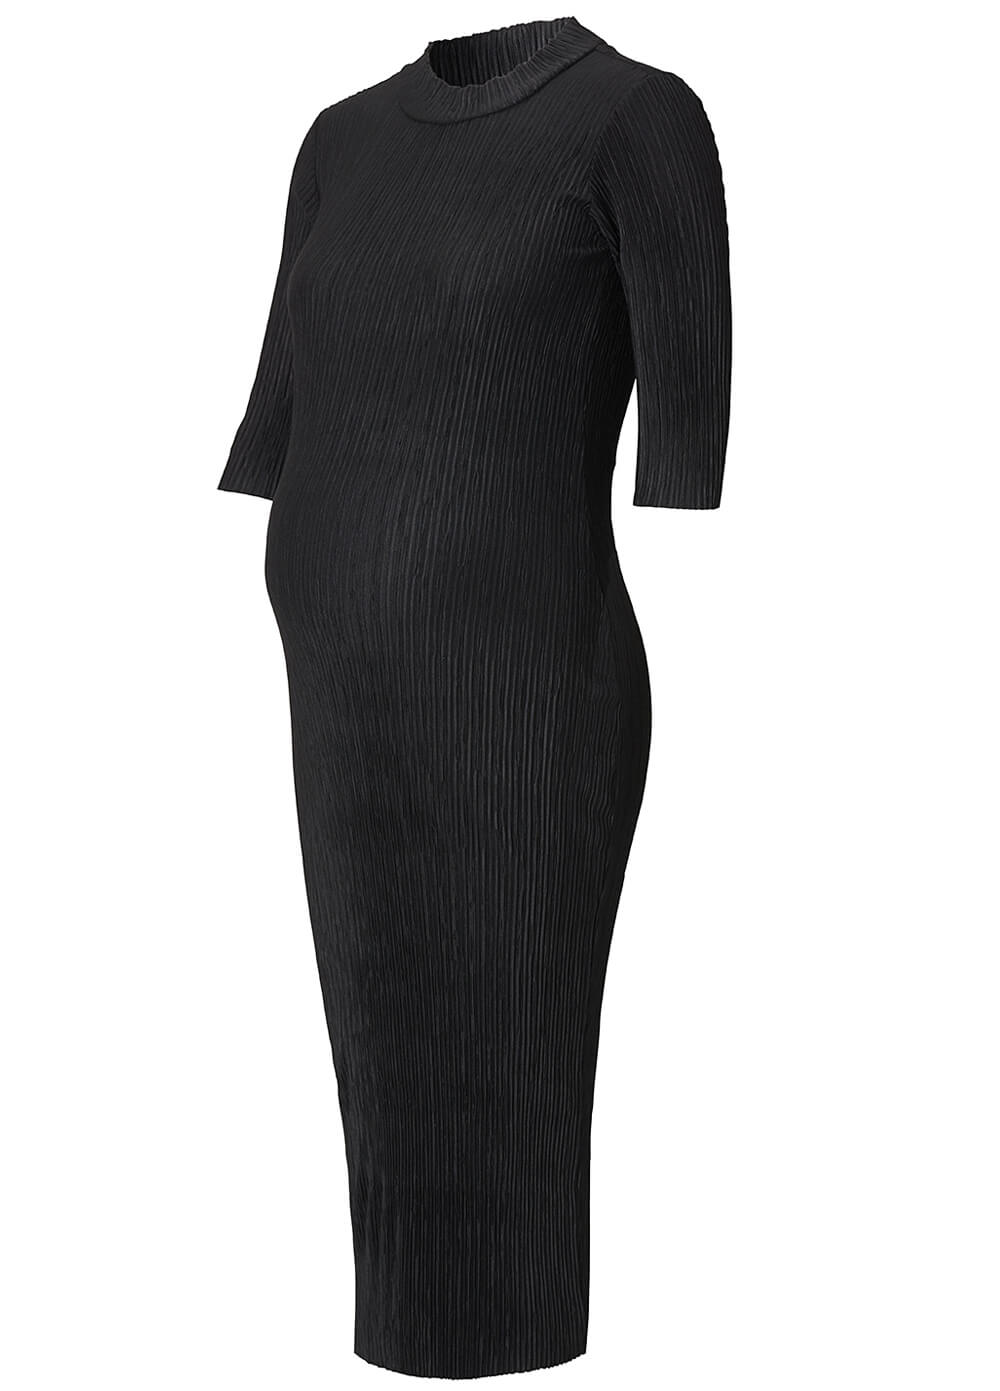 Jolein Black Pleated Maternity Midi Dress by Noppies